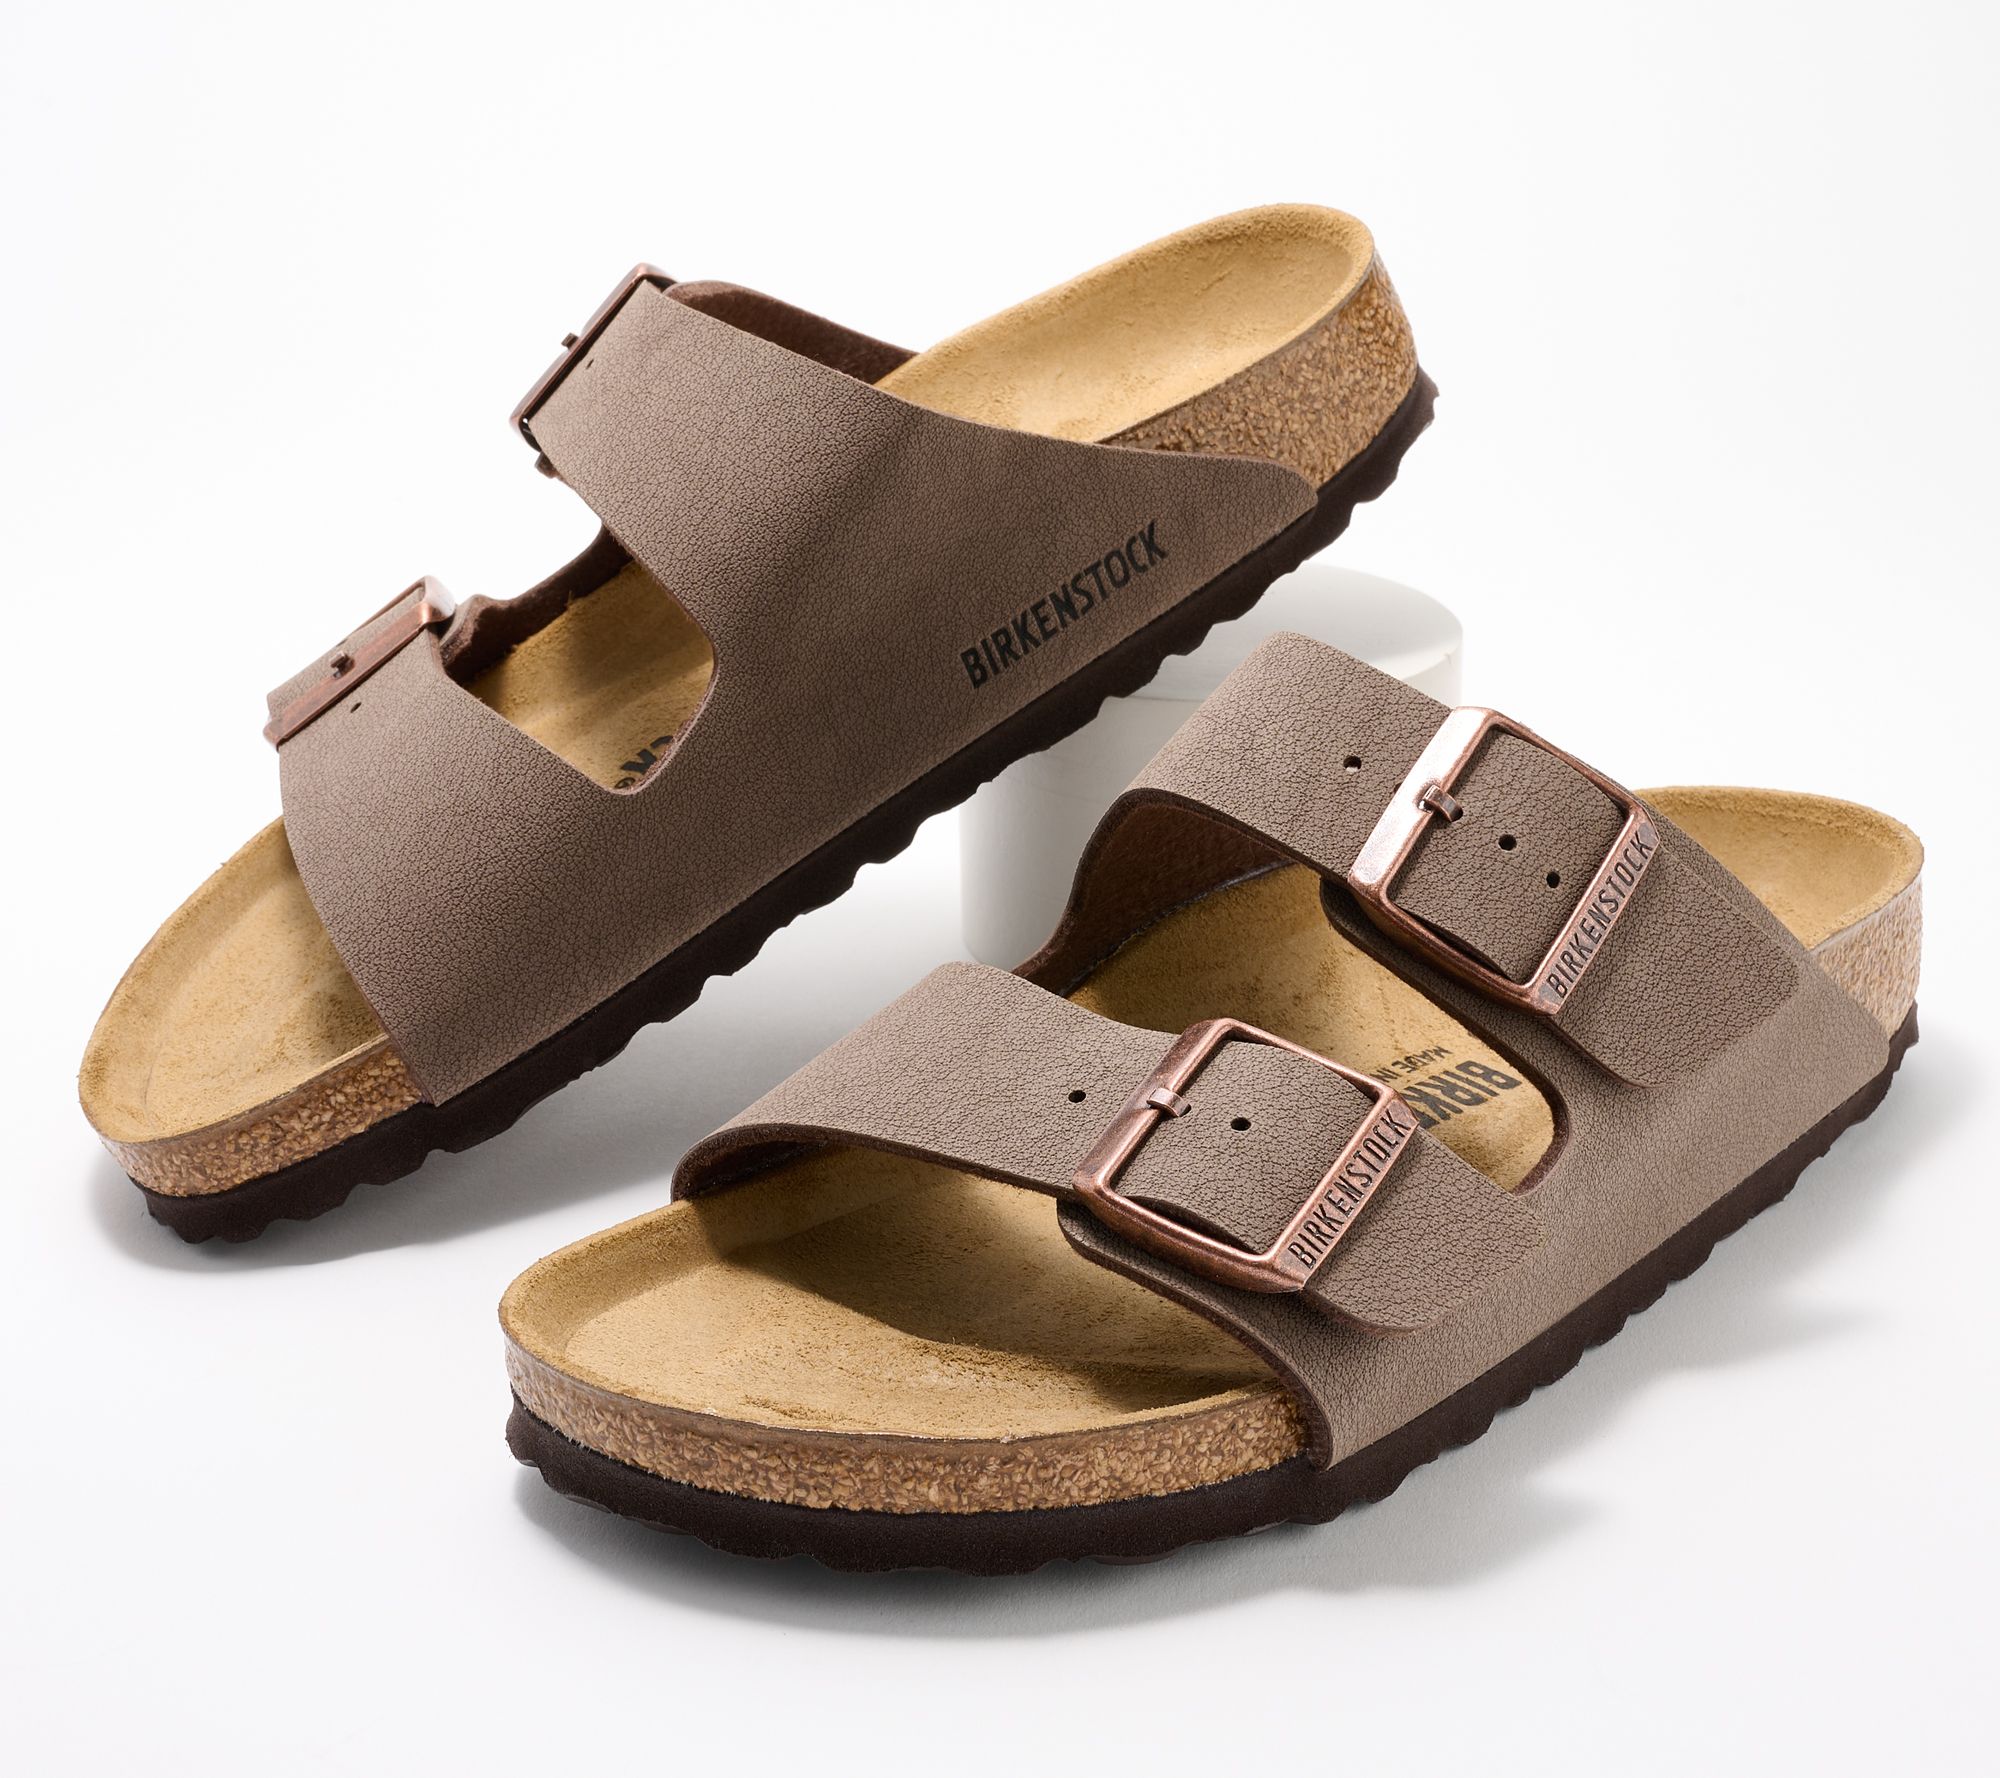 Birkenstock Arizona Two-Strap Sandals